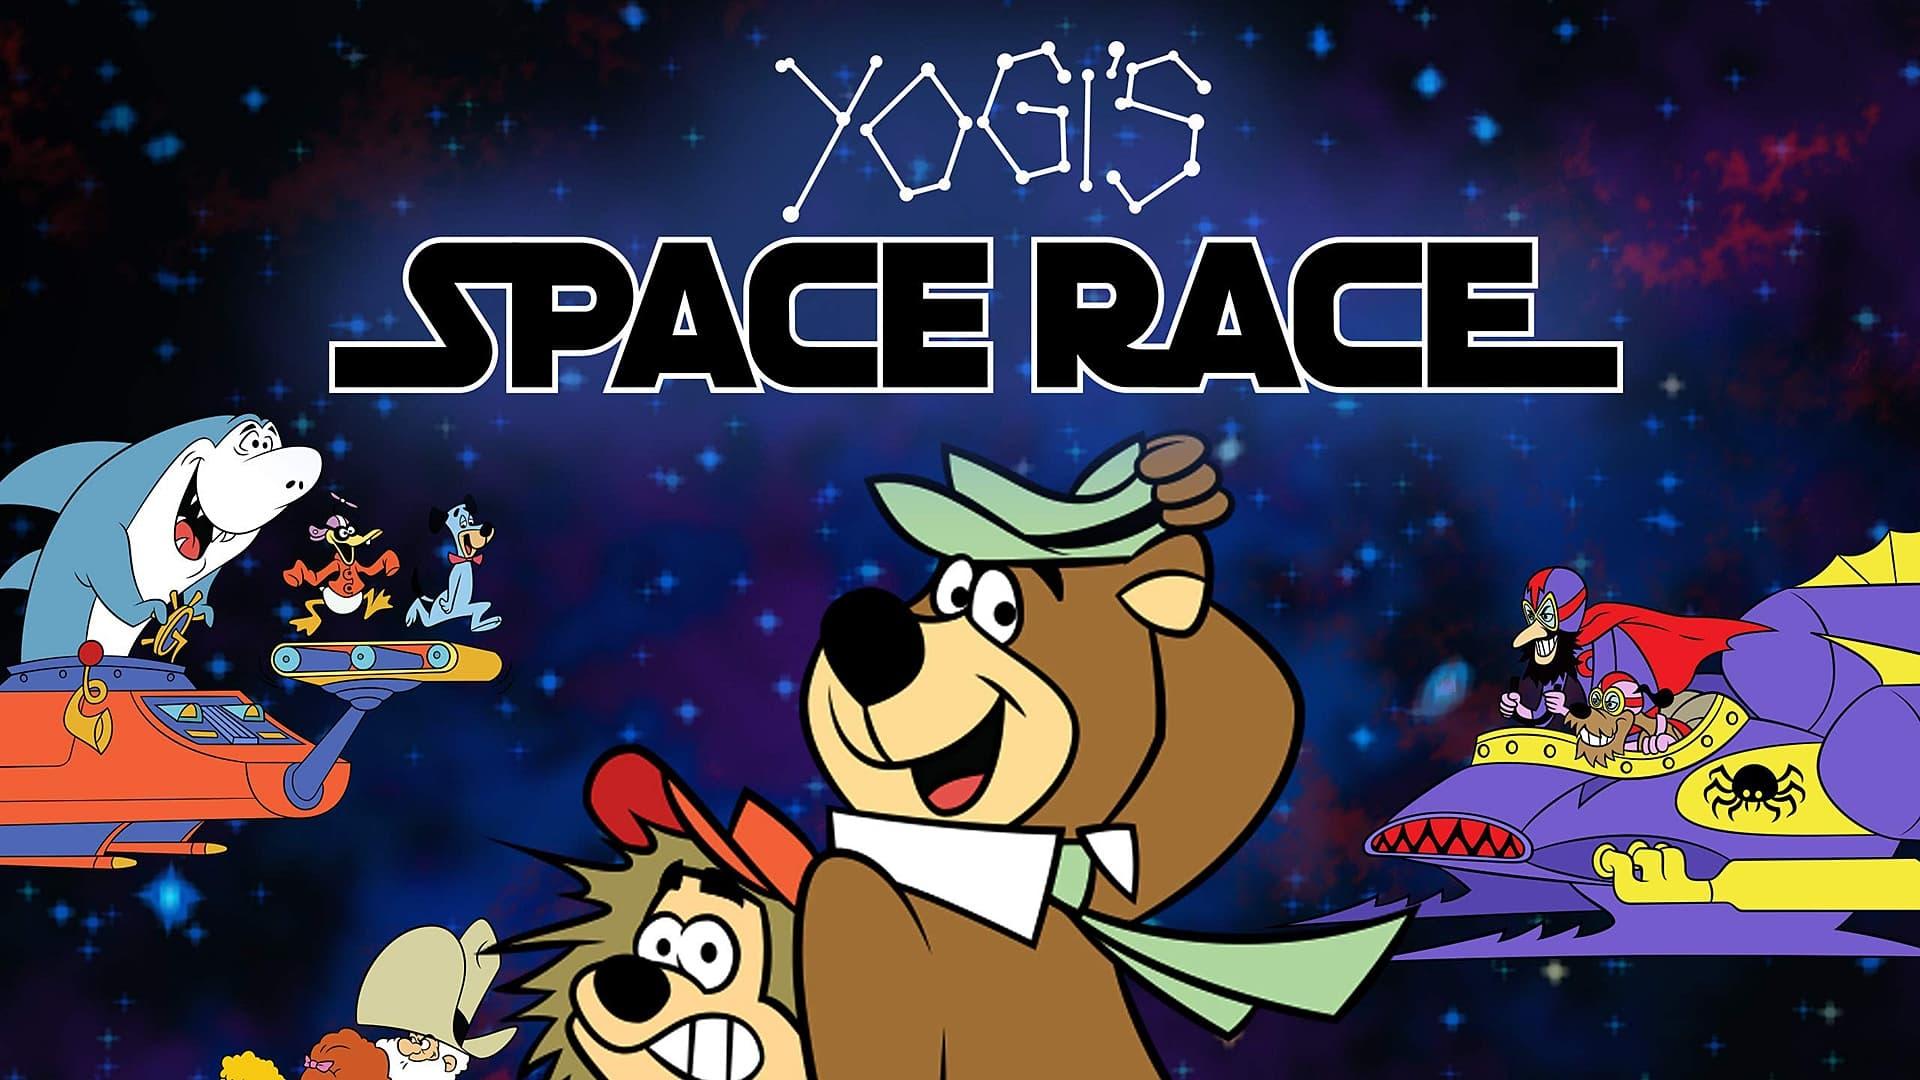 Yogi's Space Race backdrop